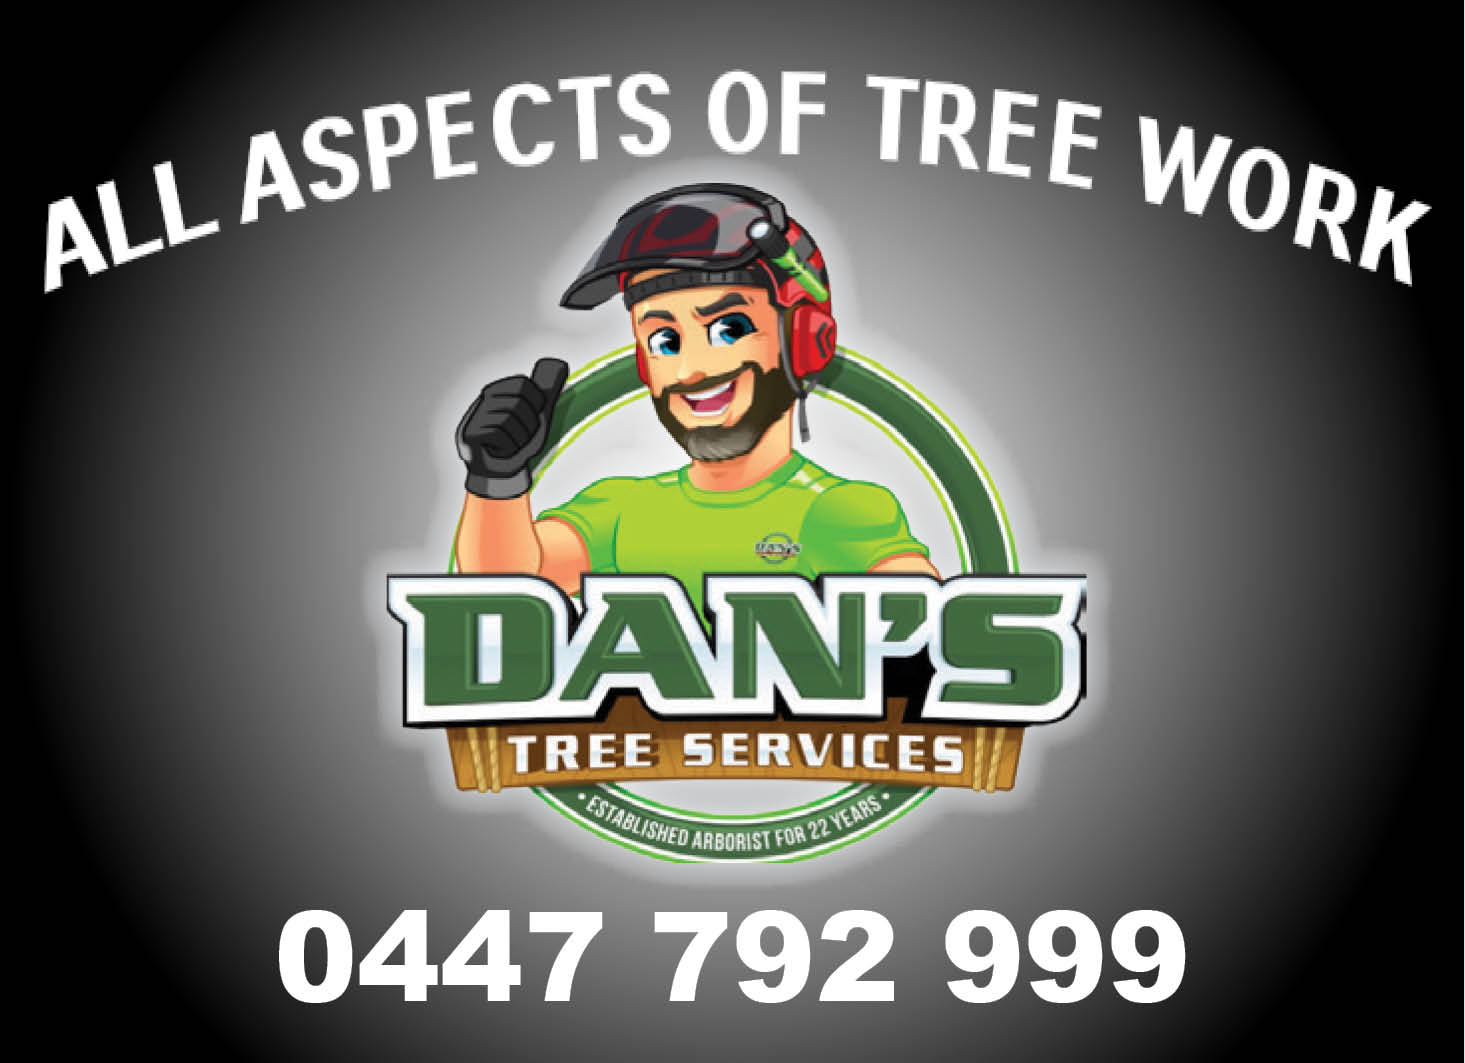 Dan's Tree Services